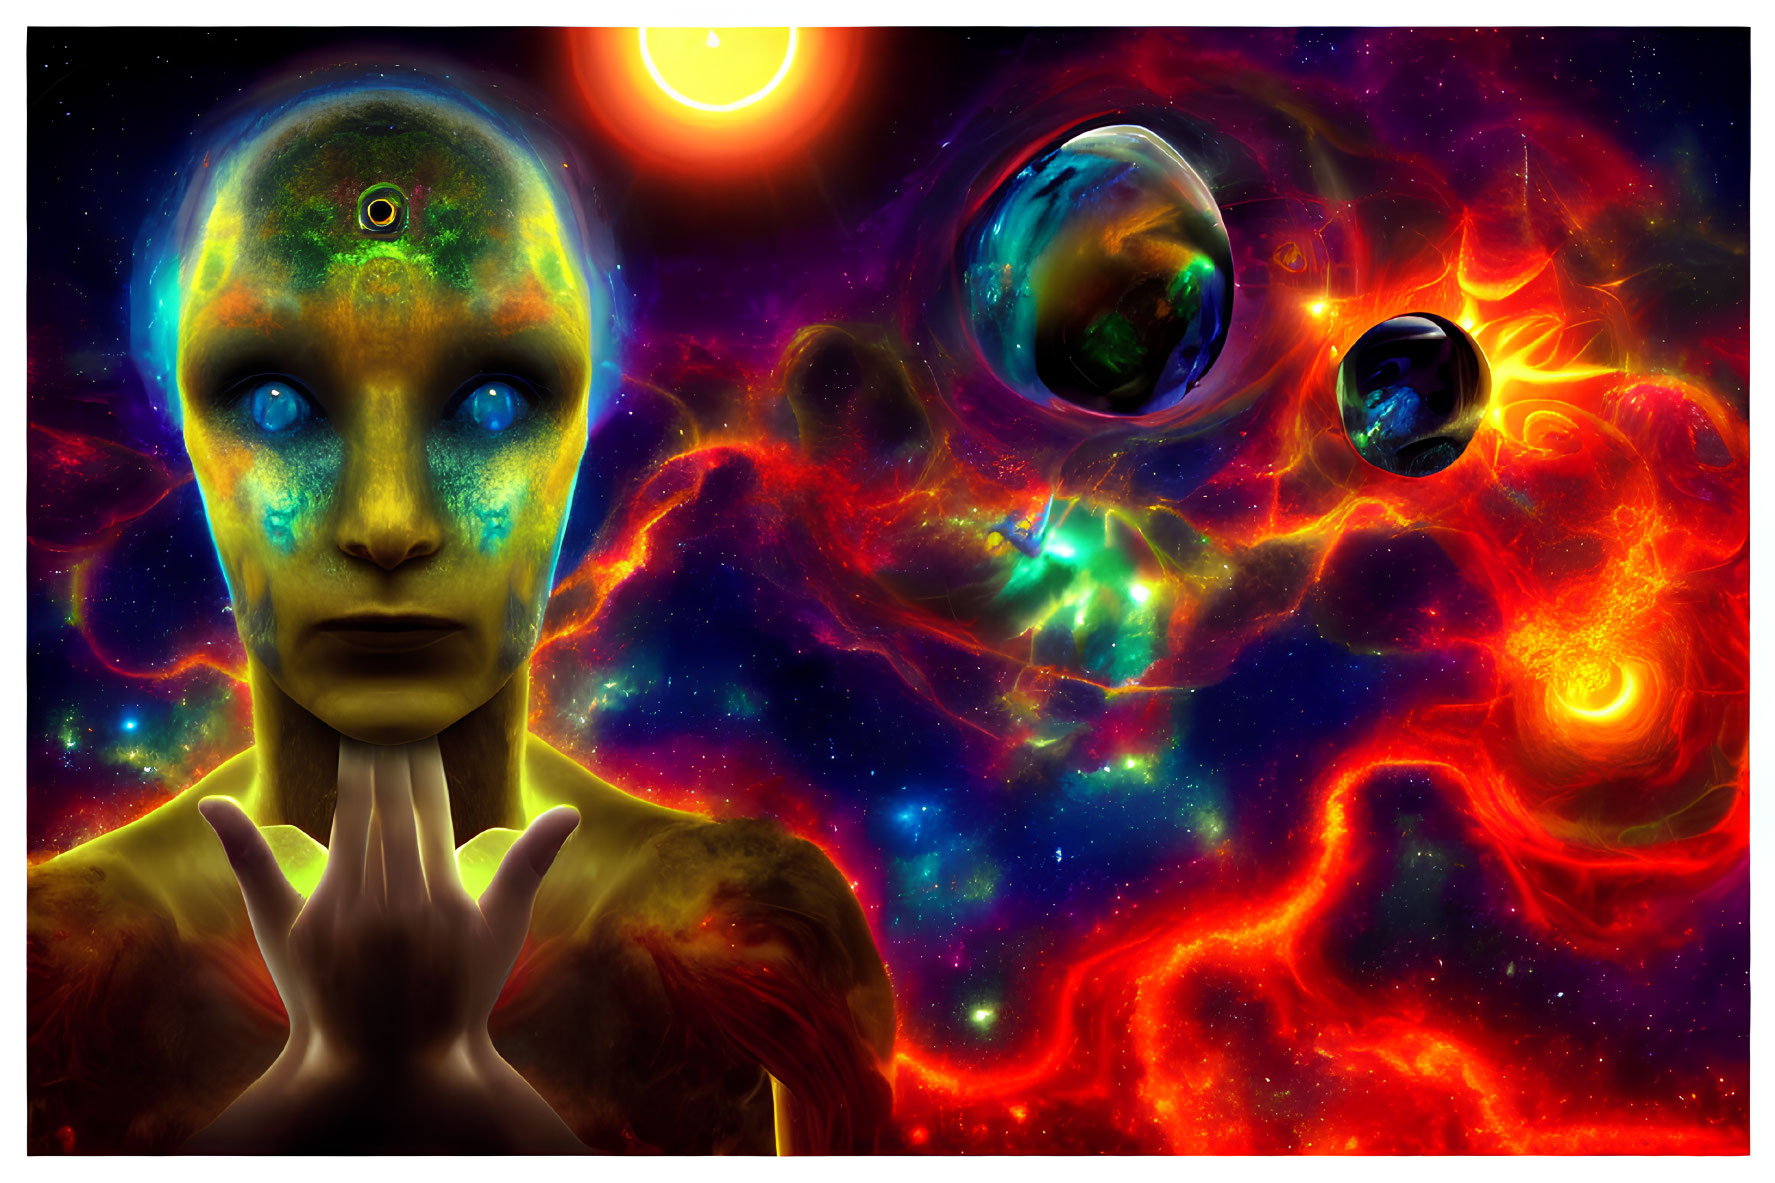 Cosmic-themed digital artwork of humanoid figure in galaxy skin with nebula backdrop